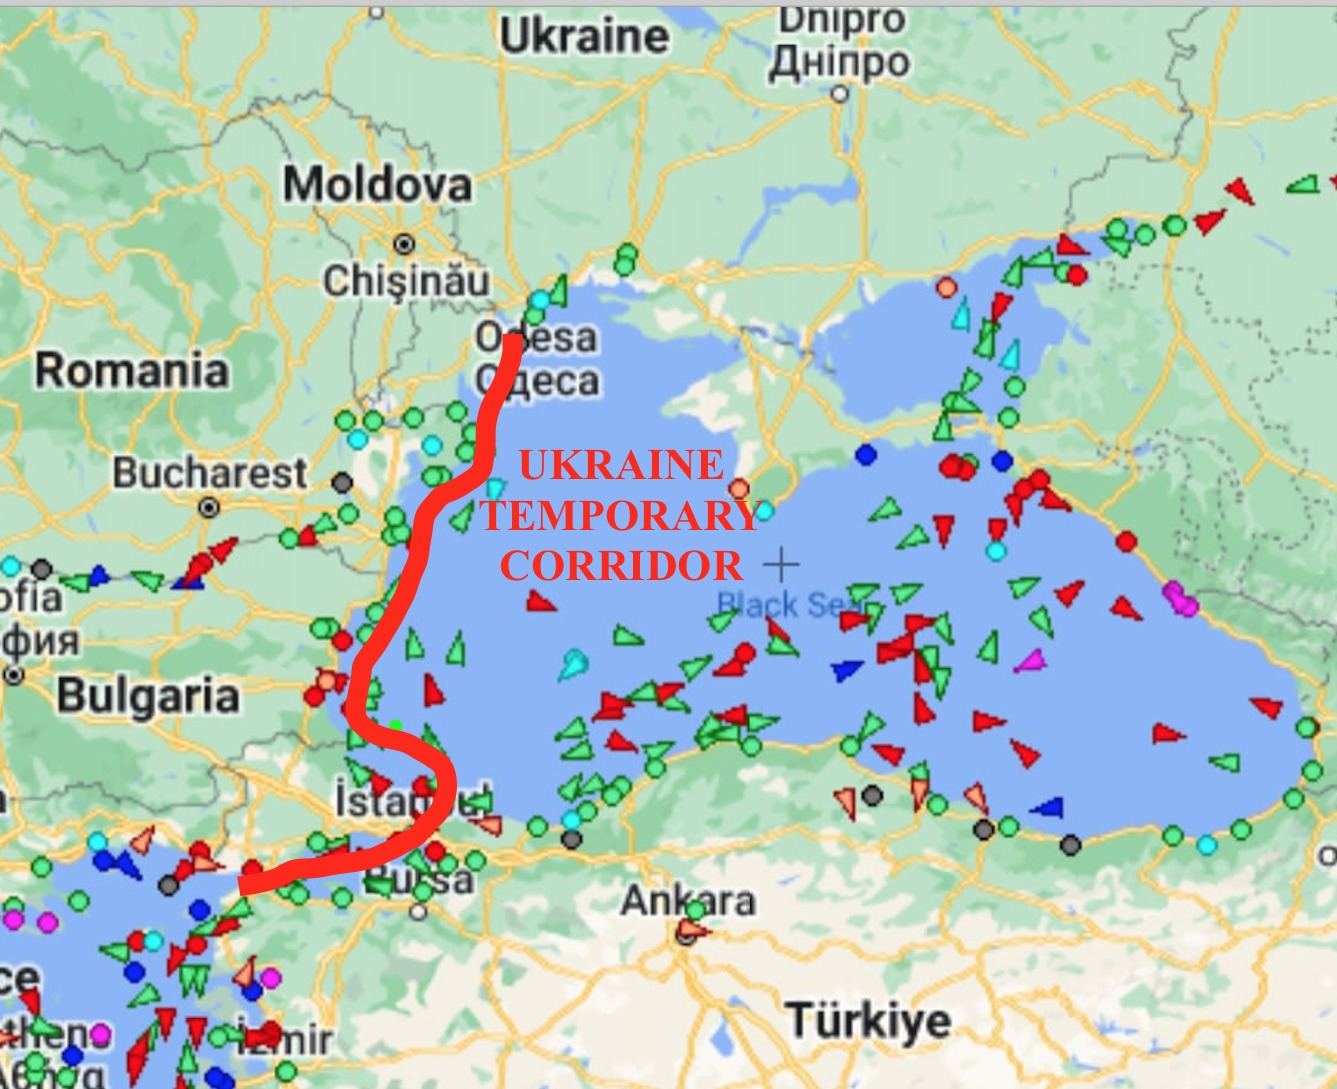 Ukraine 🇺🇦 suspends new Black Sea grain corridor due to military risks.